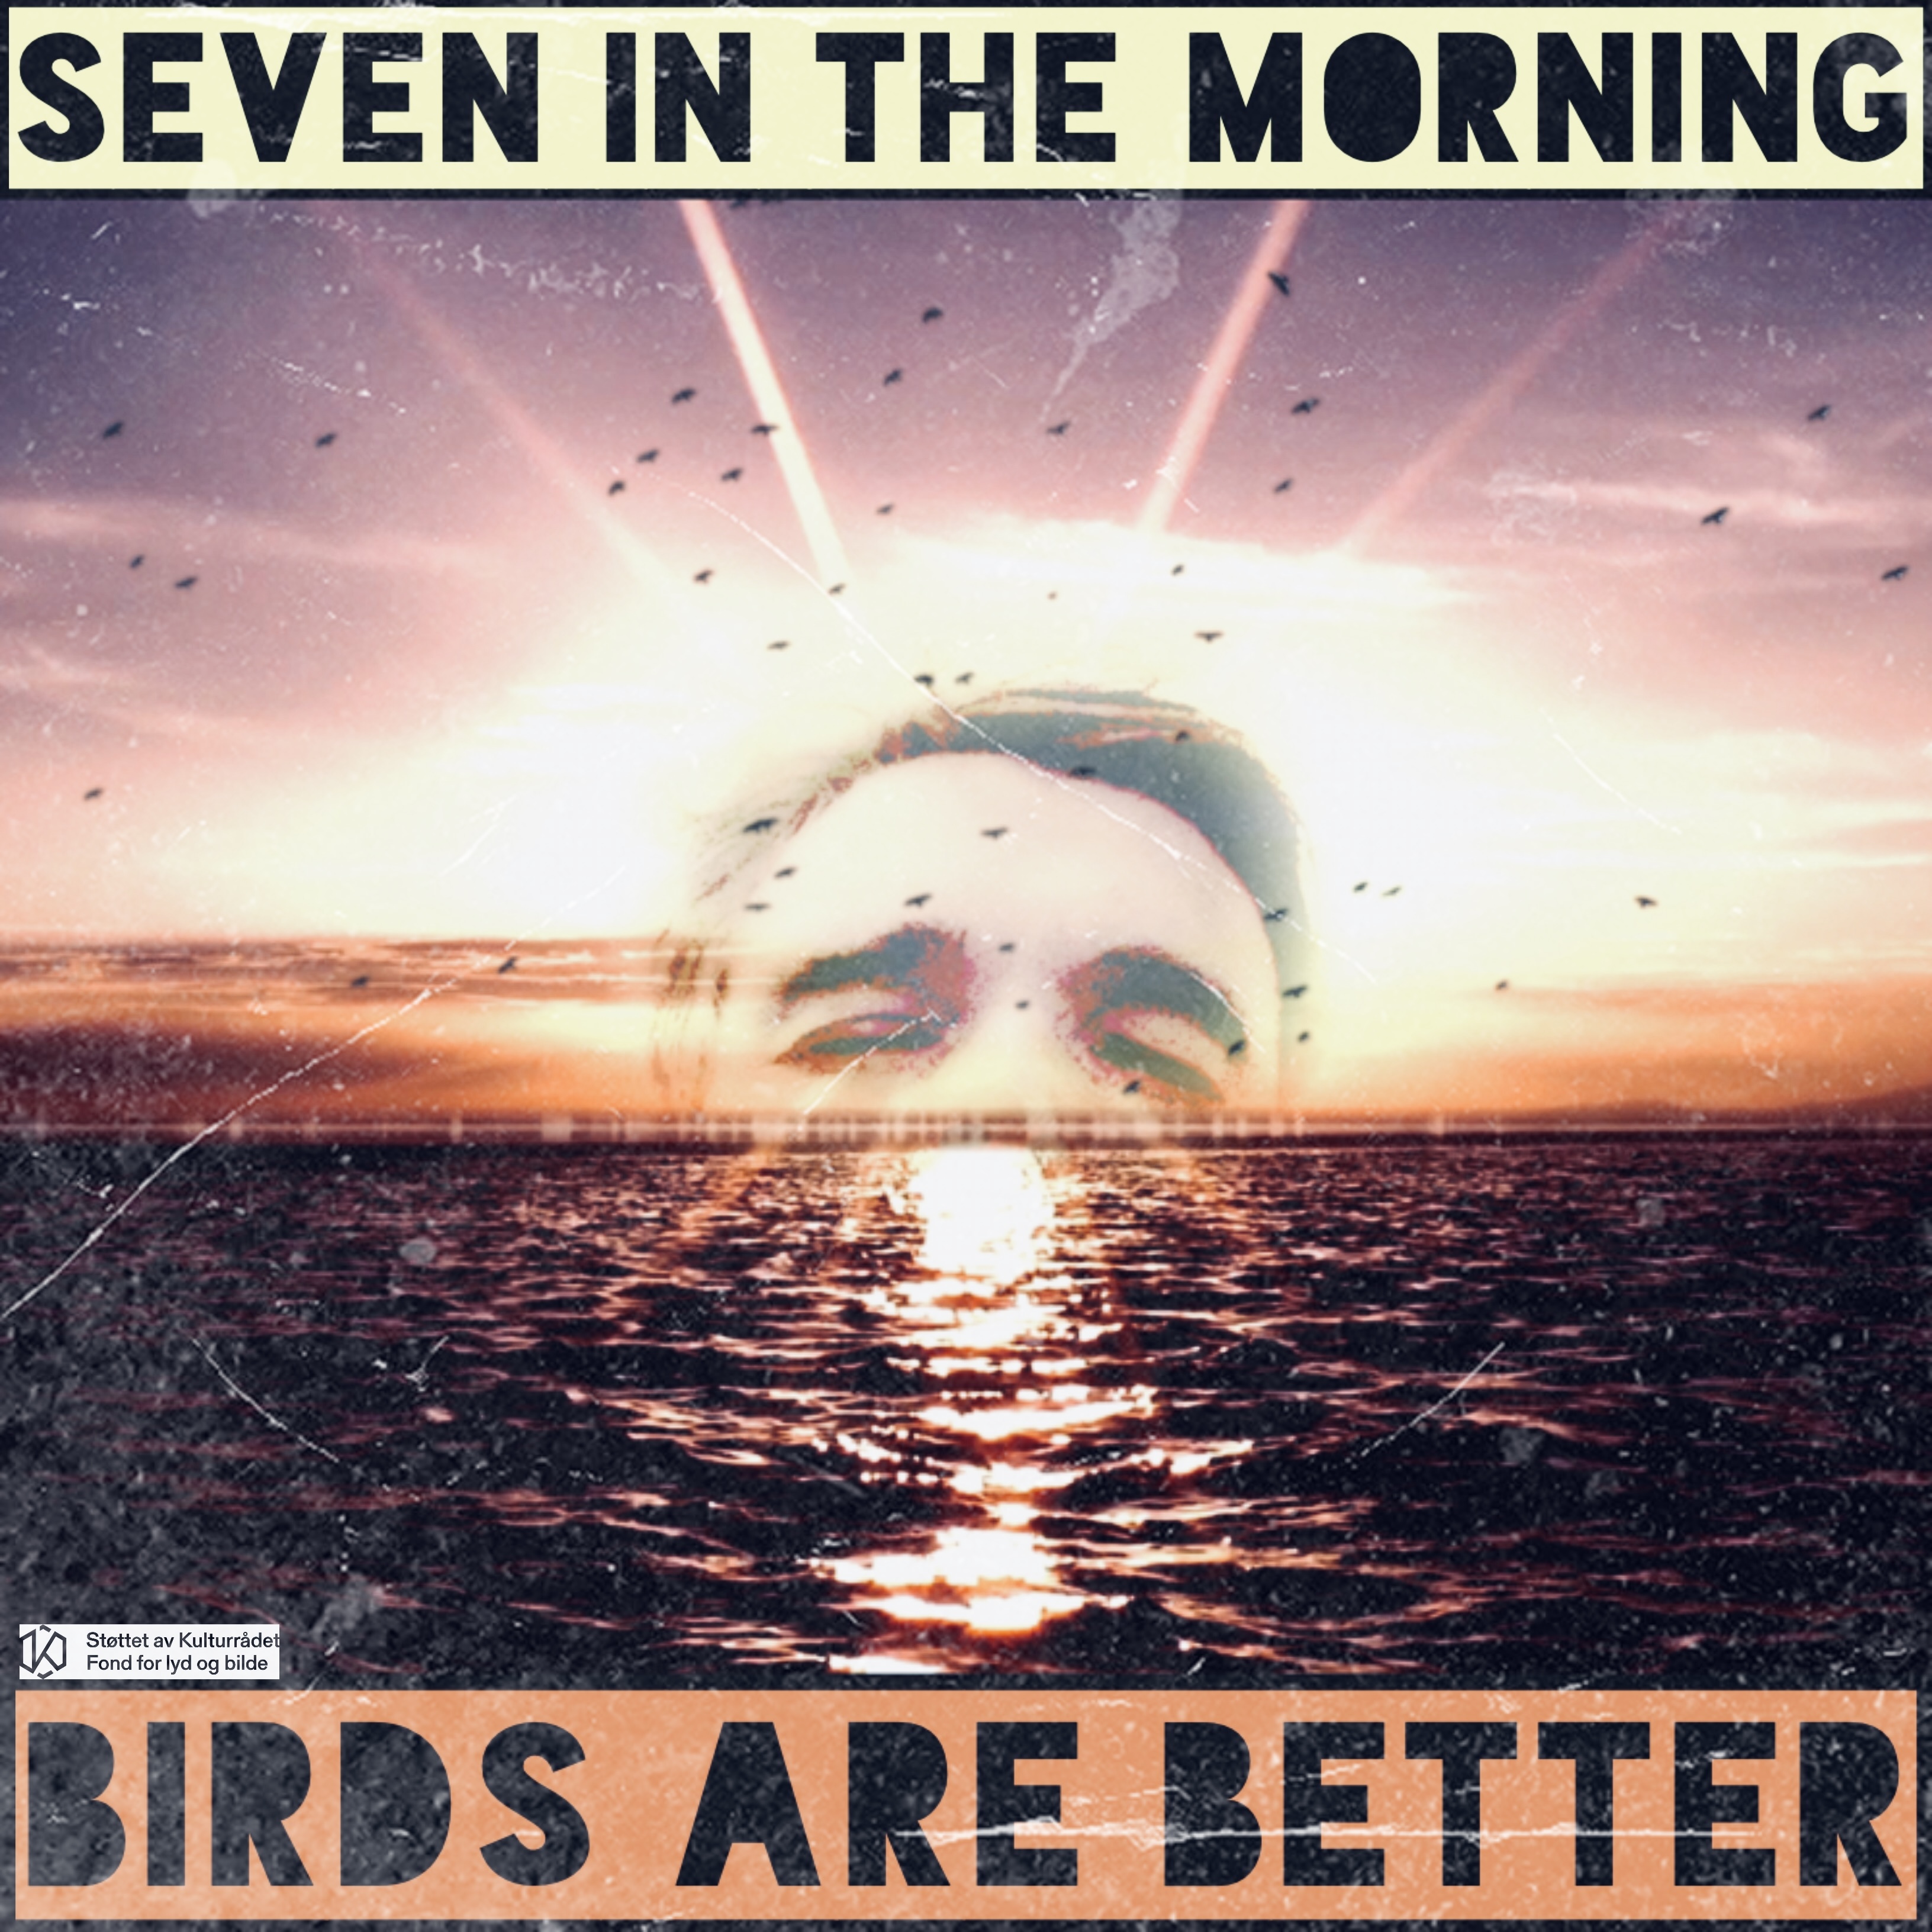 Birds Are Better "Seven in the Morning" artwork